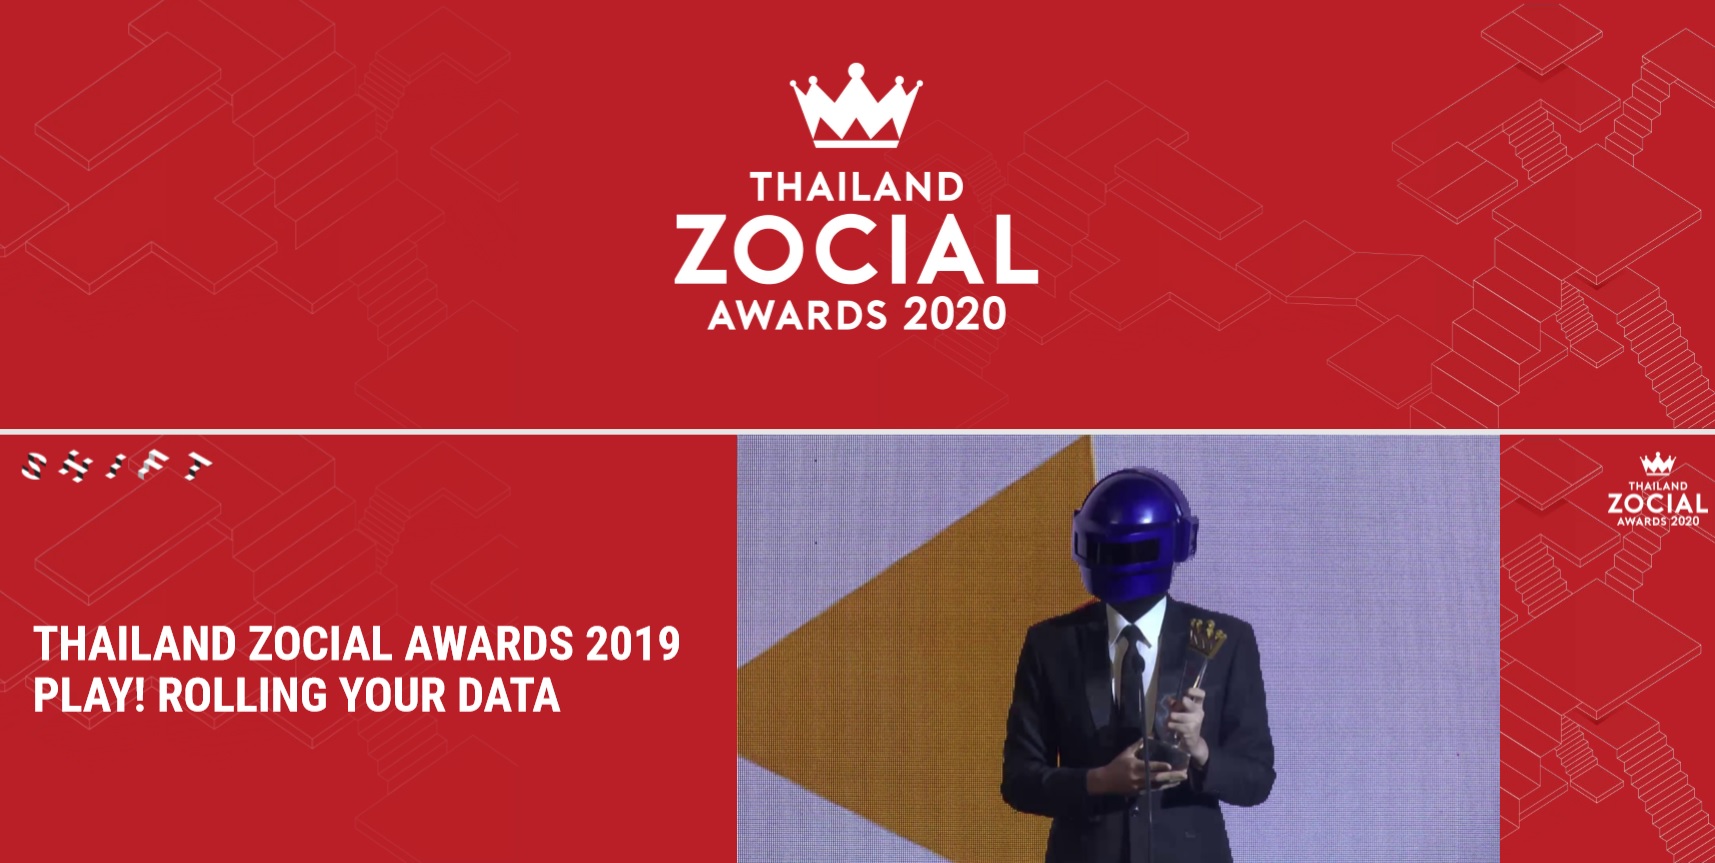 Thailand Zocial Awards 2020 แจกรางวัลมากถึง 192 รางวัล ประกาศรายชื่อแบรนด์ที่เข้ารอบแล้ววันนี้